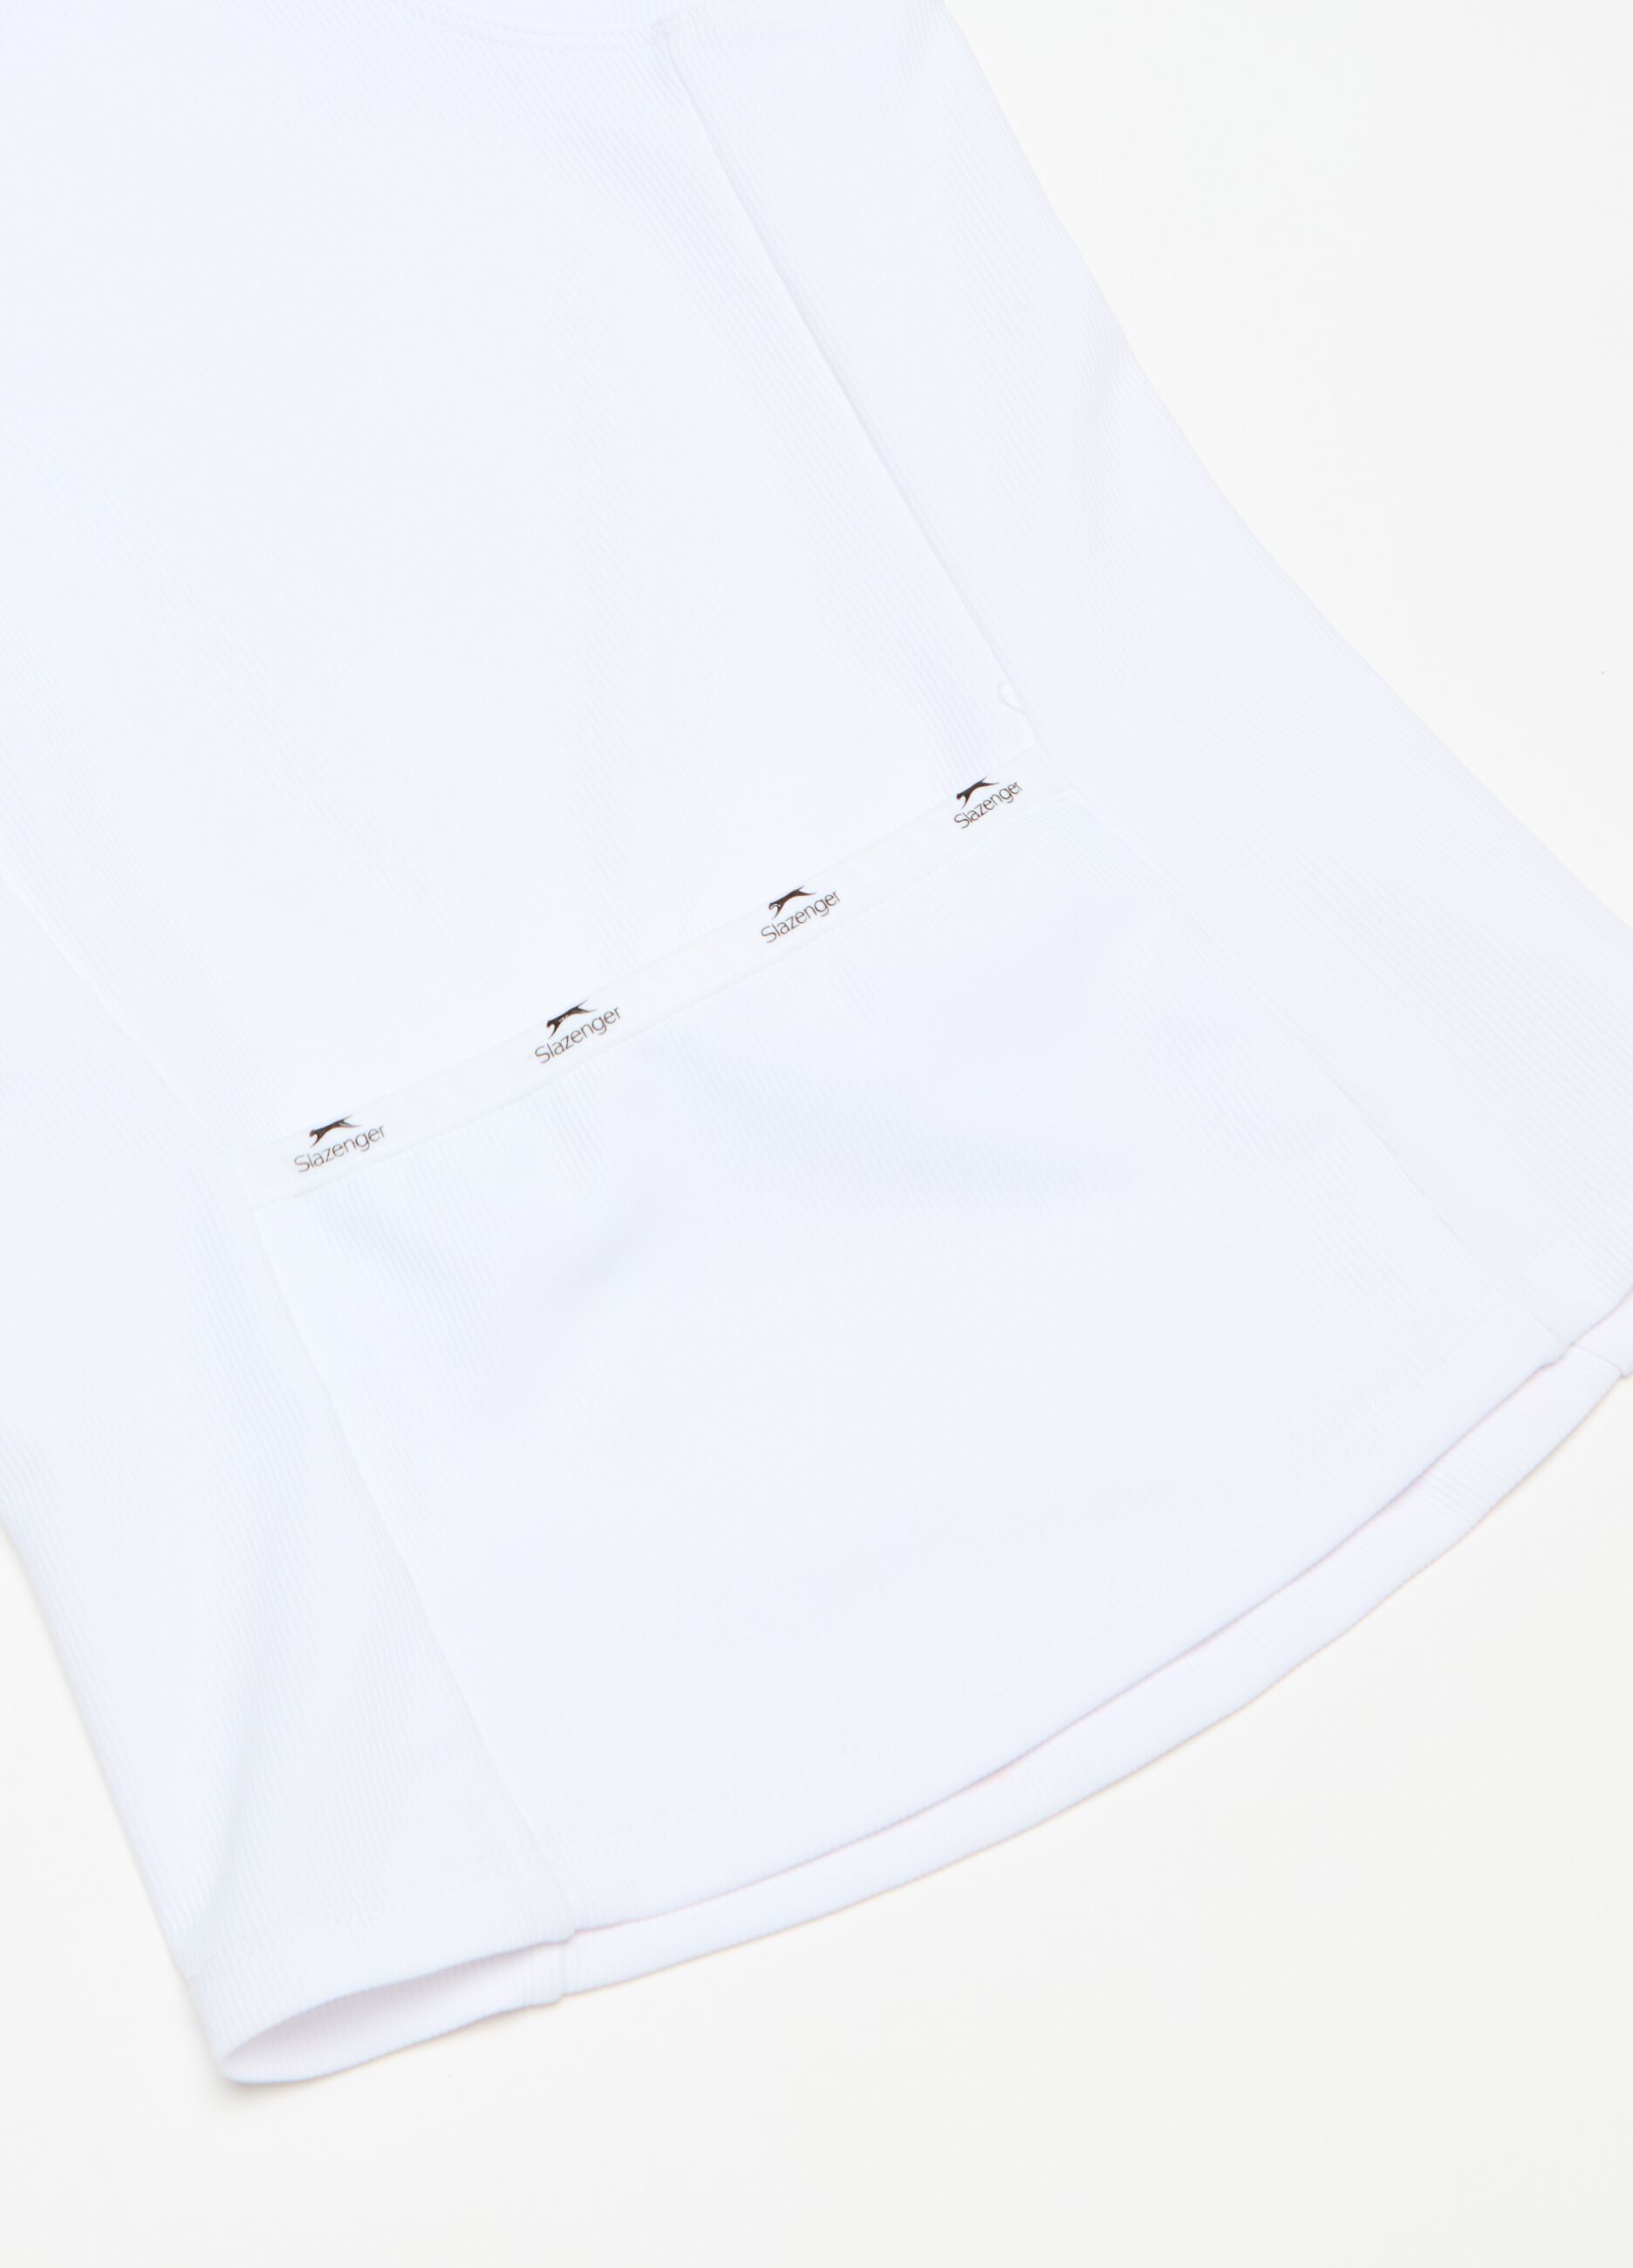 Camiseta de tirantes de tenis secado rápido Slazenger